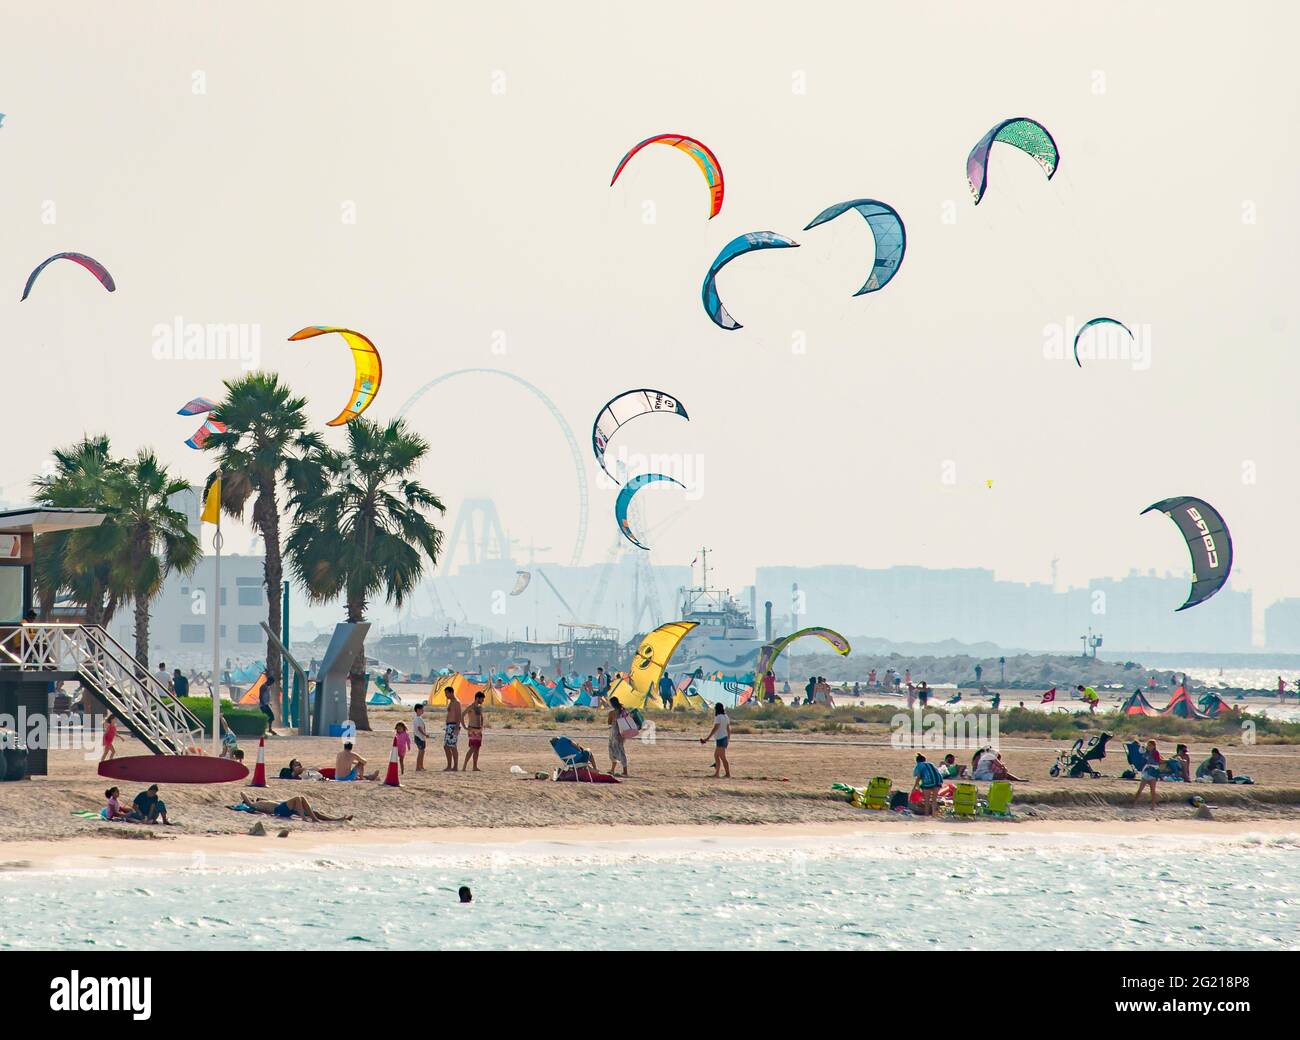 Beach vista with kite surfers in Dubai Stock Photo